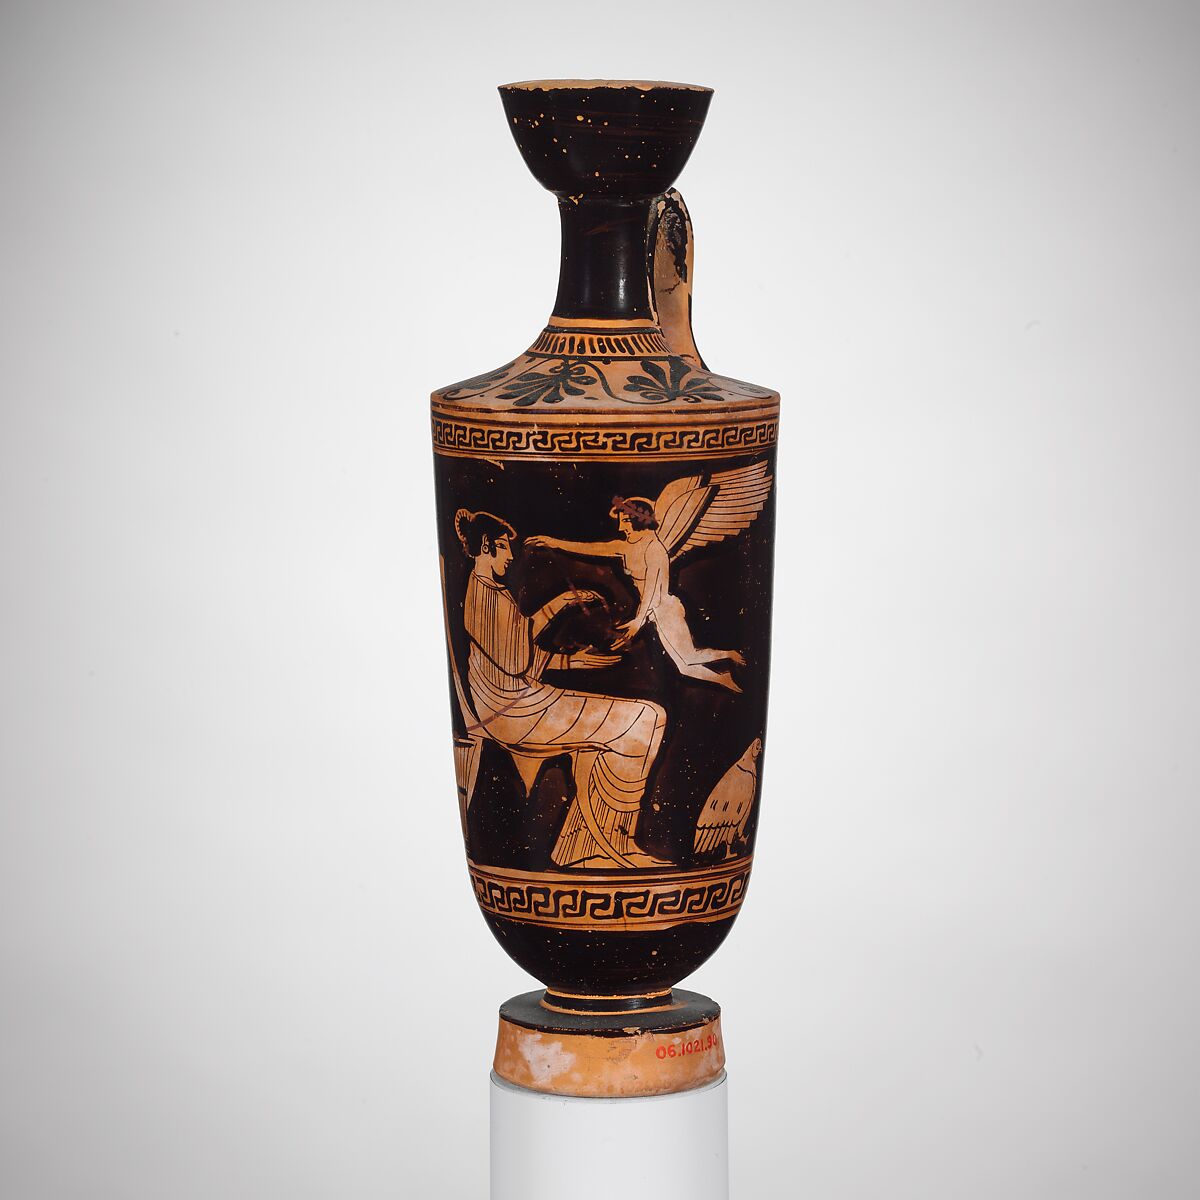 Terracotta lekythos (oil jar), Attributed to the Bowdoin Painter, Terracotta, Greek, Attic 